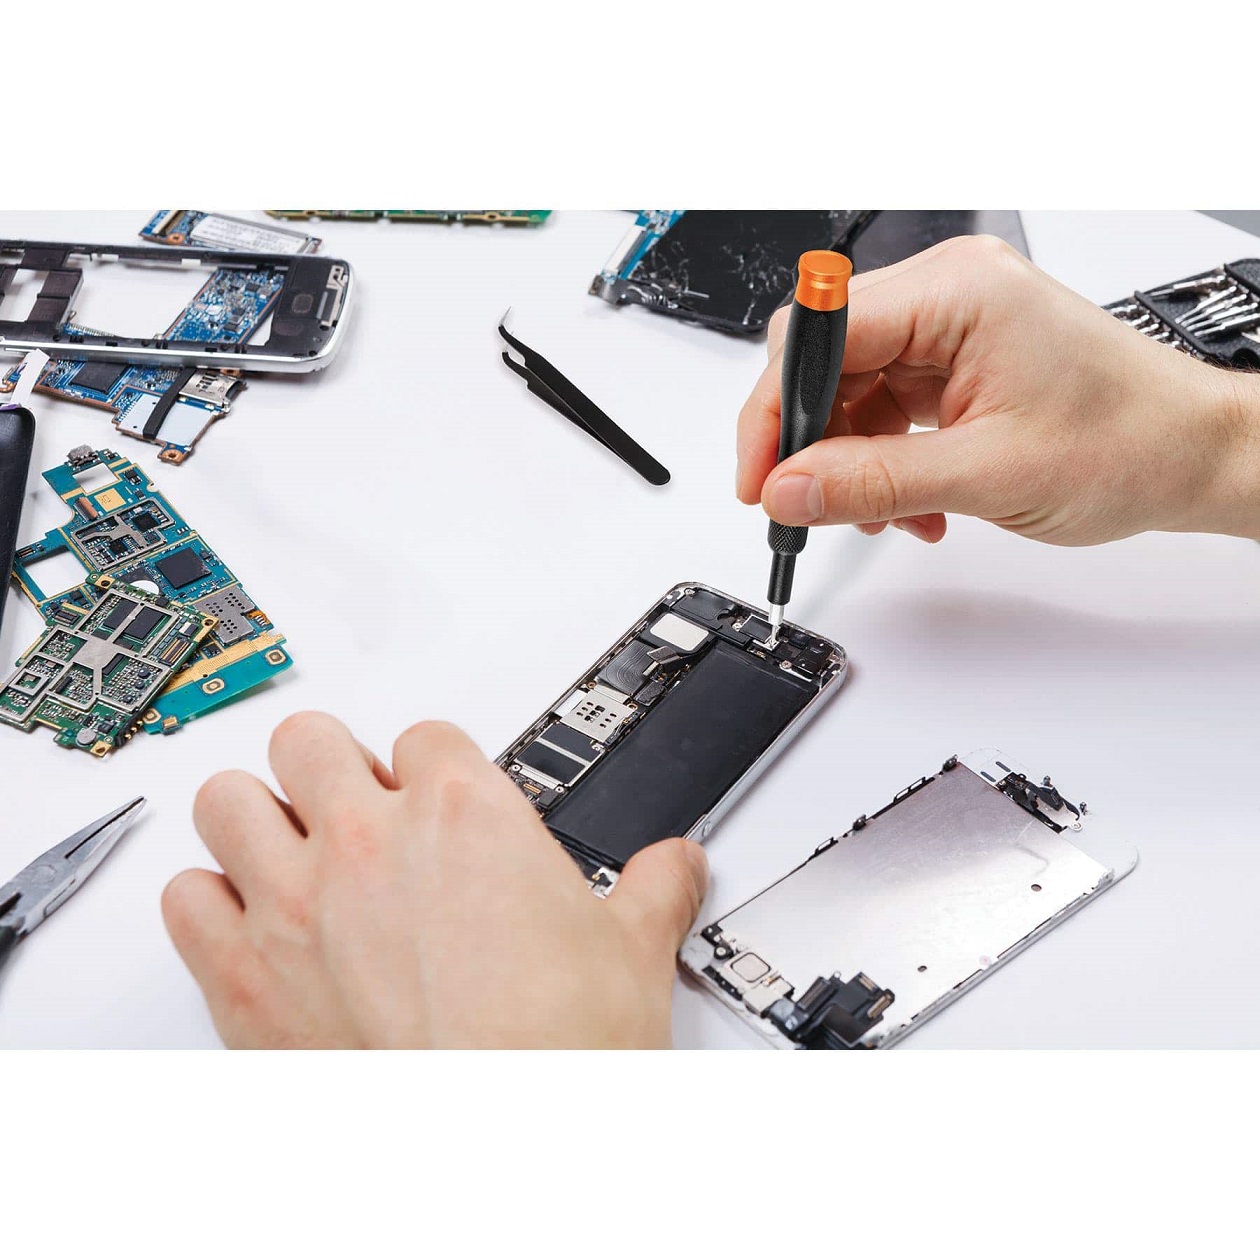 Kit de reparacion de celulares reparación para moviles smart pantallas  baterias